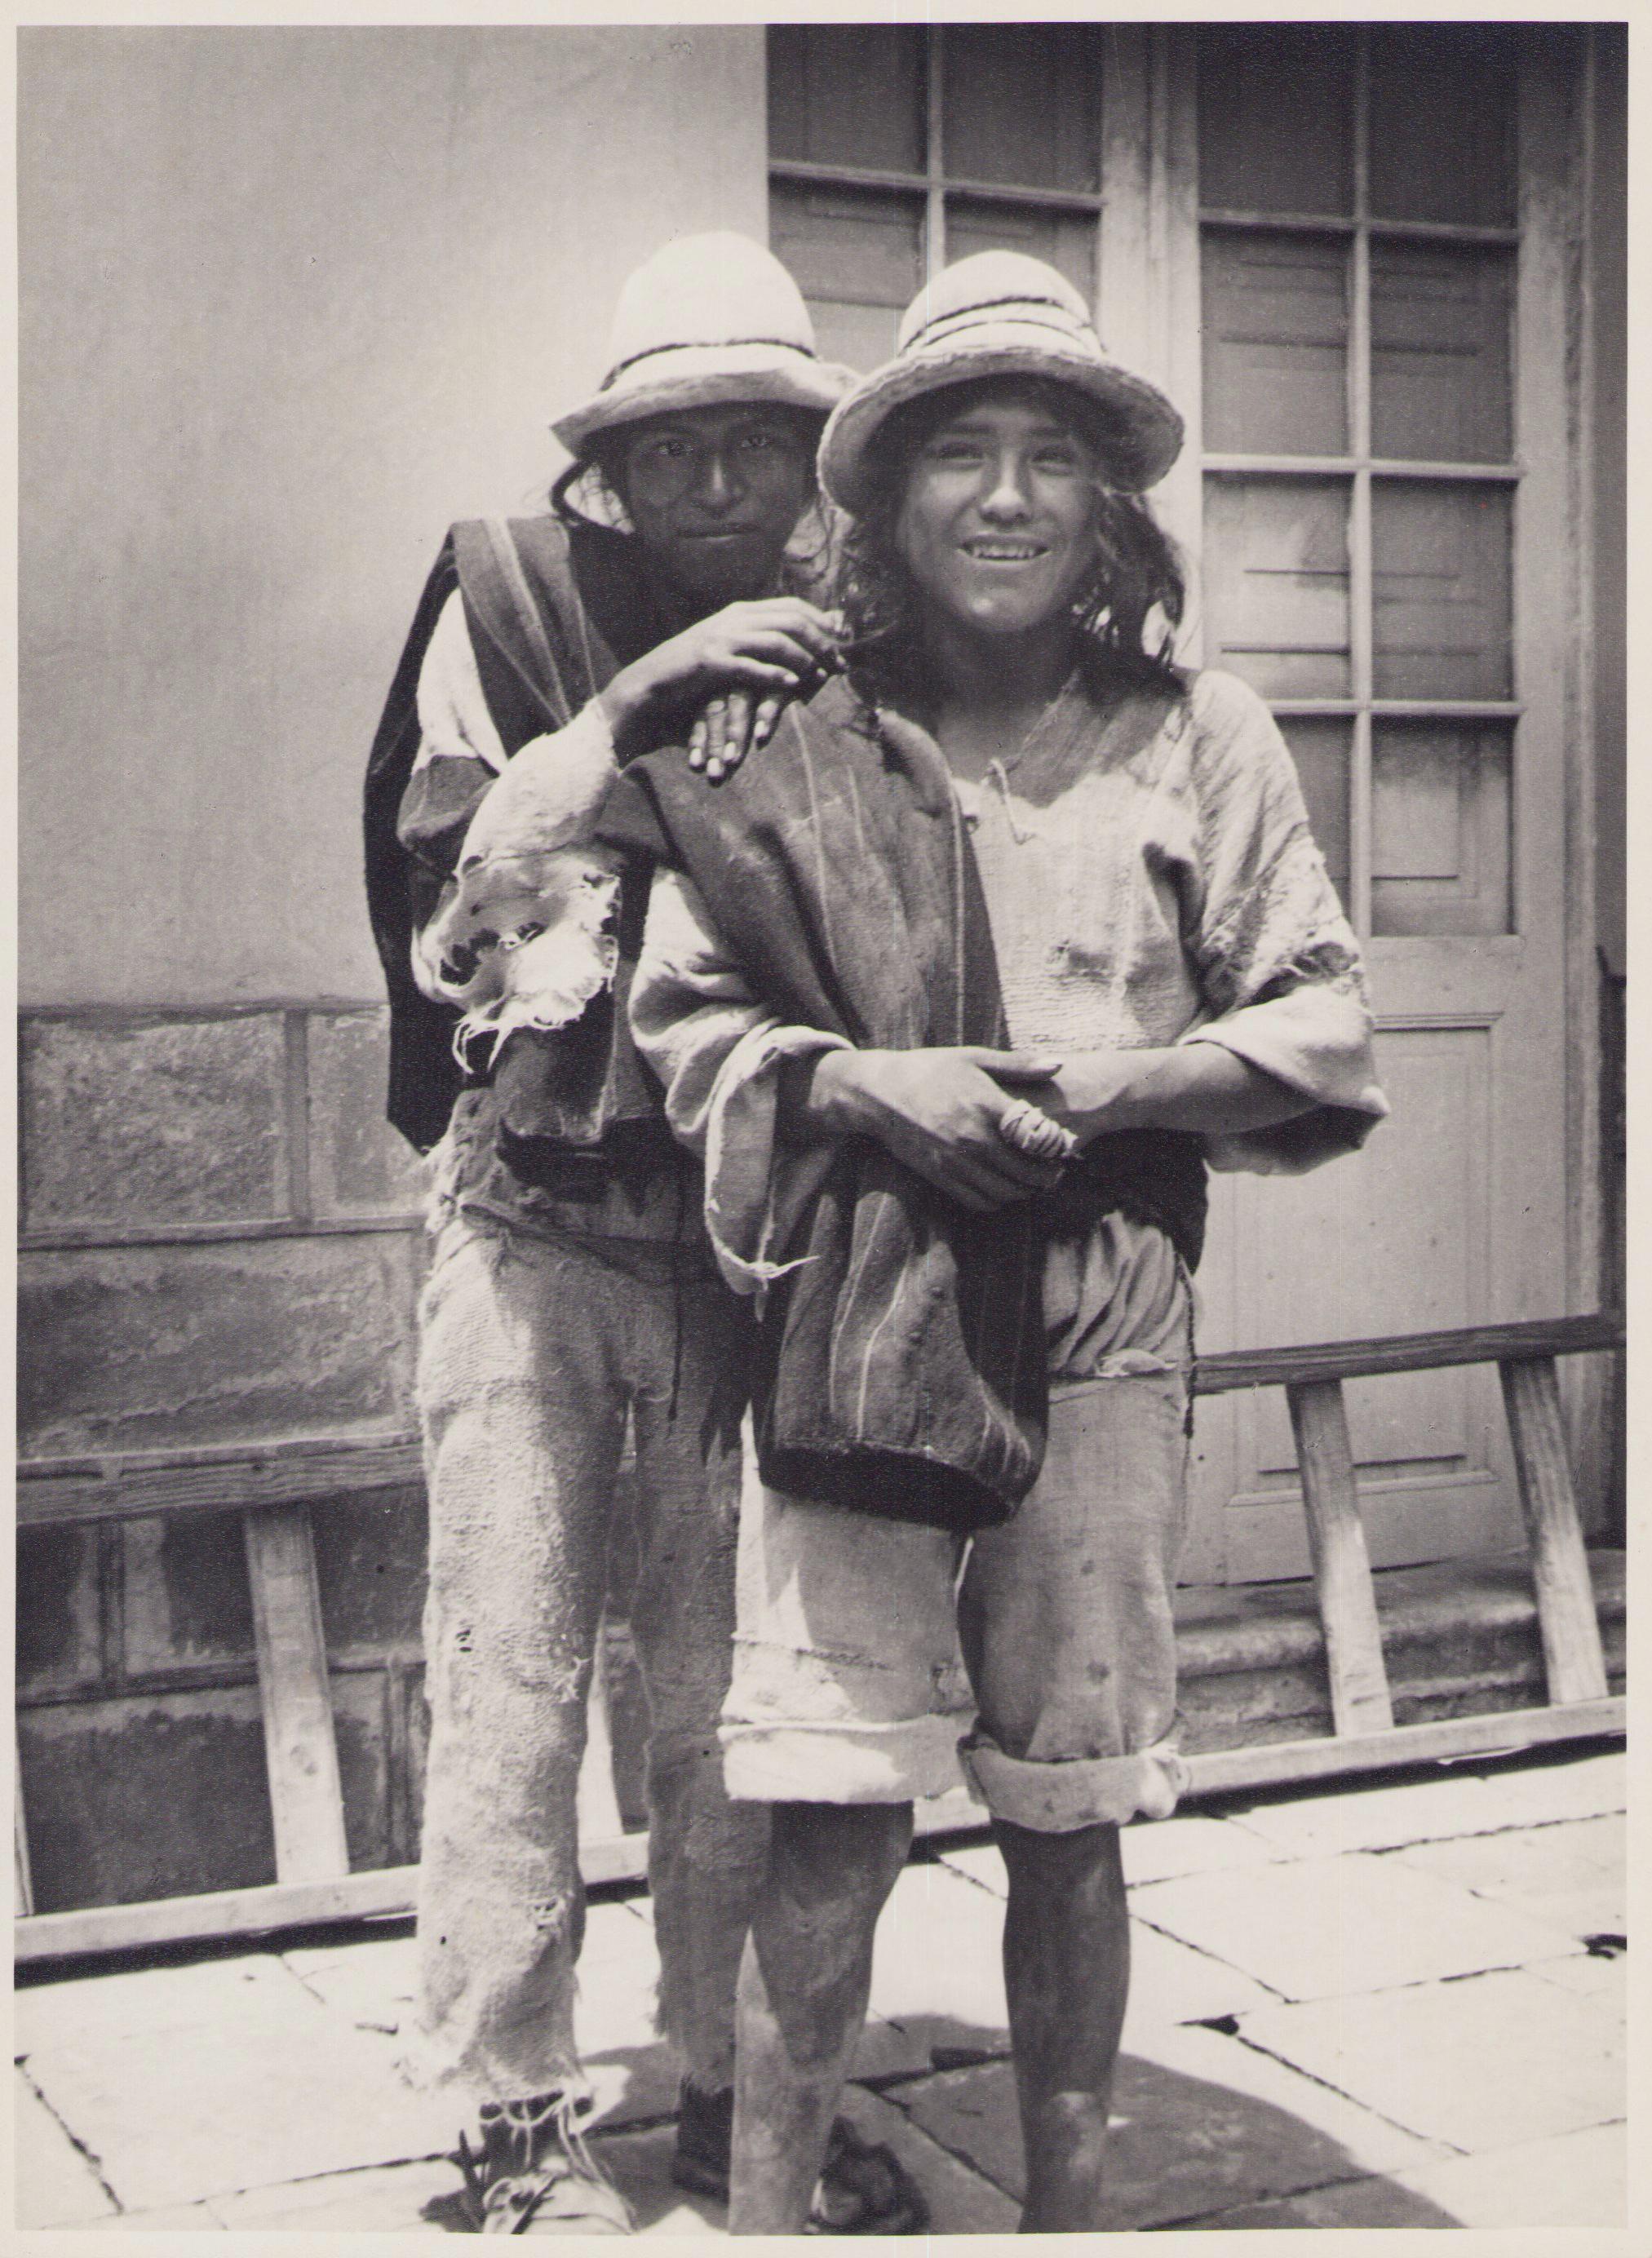 Hanna Seidel Portrait Photograph - Bolivia, People, Black and White Photography, 1960s, 23, 5 x 17, 4 cm